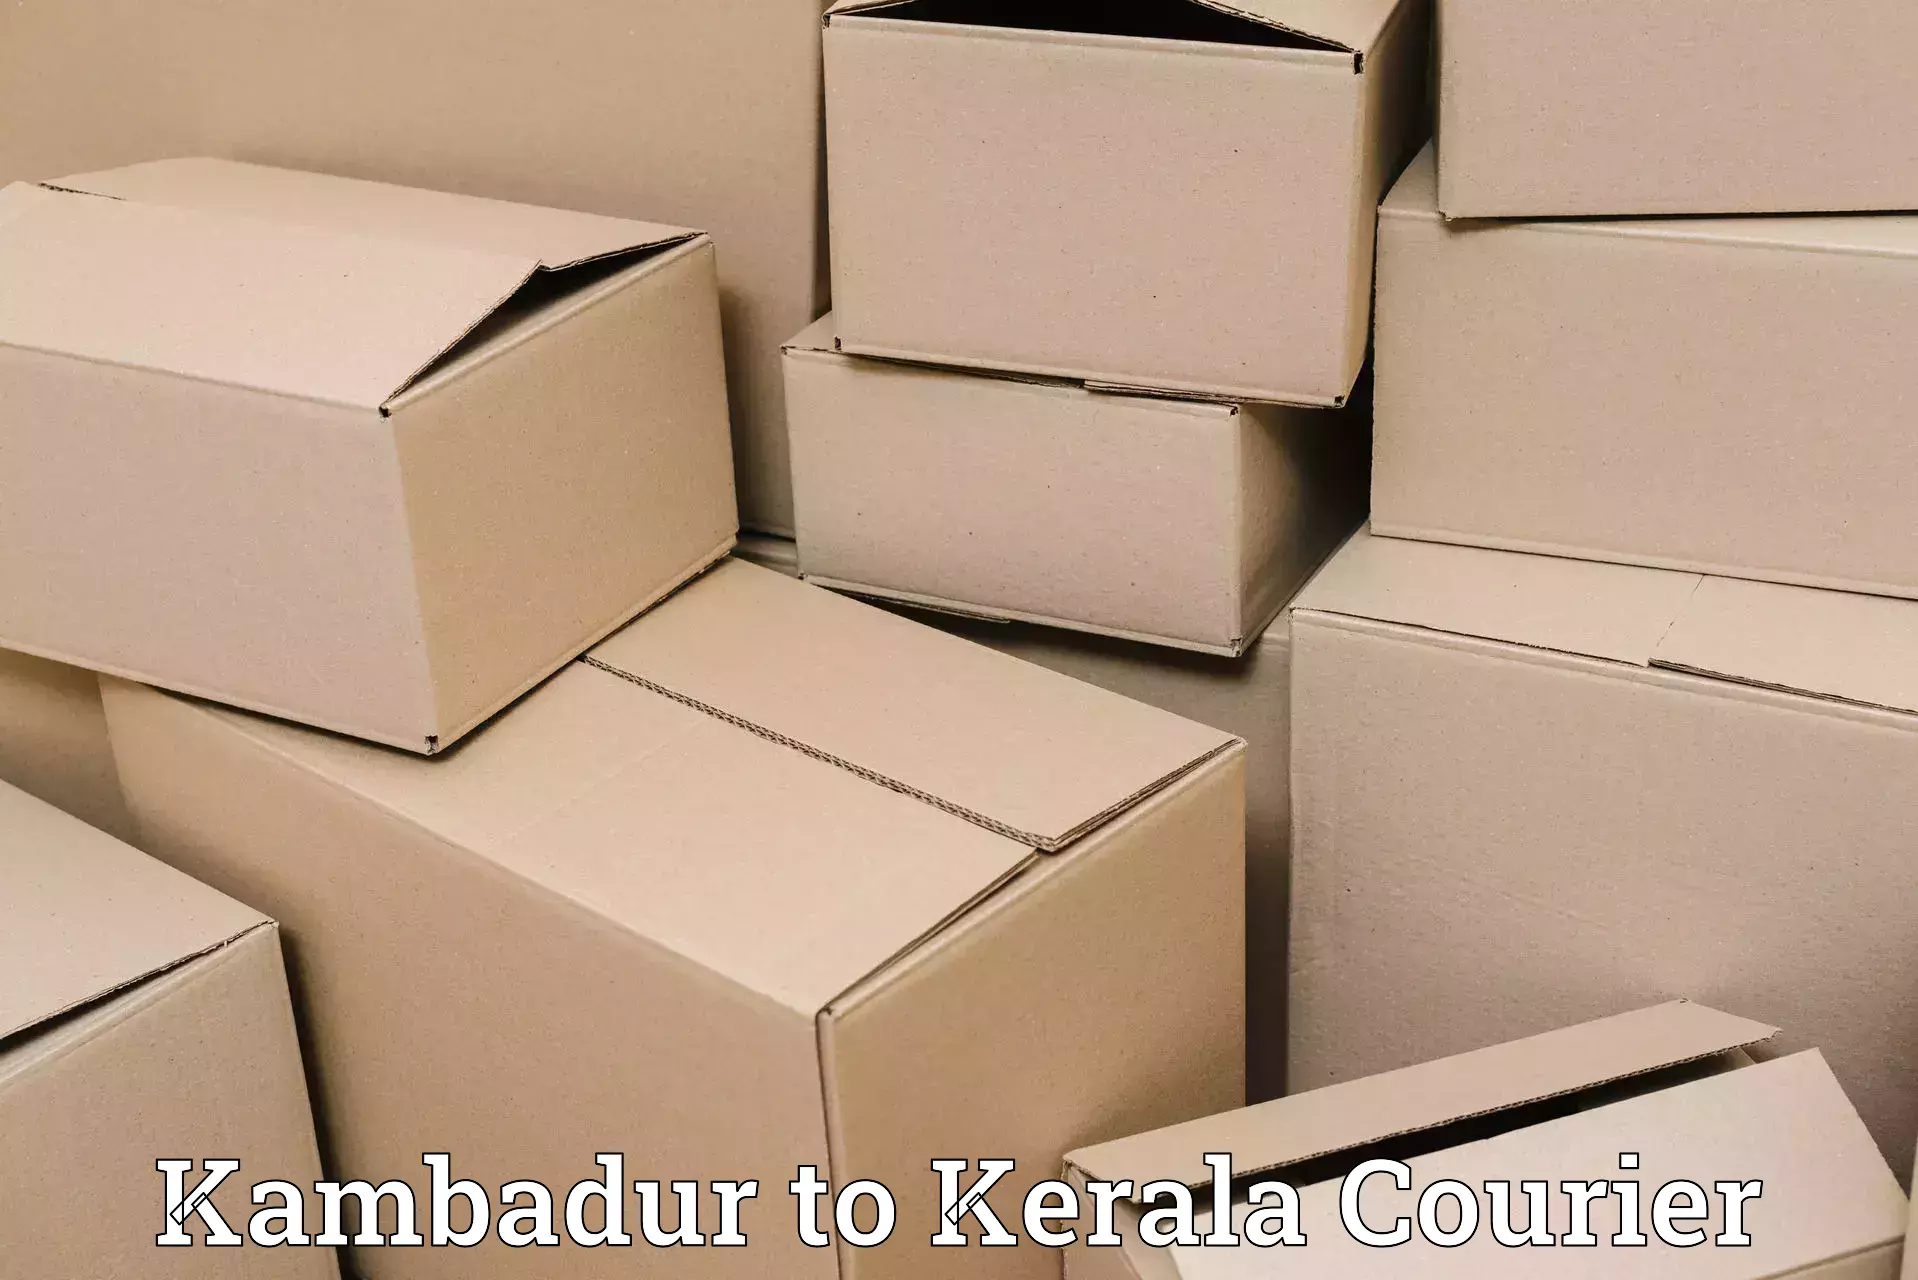 Fast delivery service in Kambadur to Cochin Port Kochi